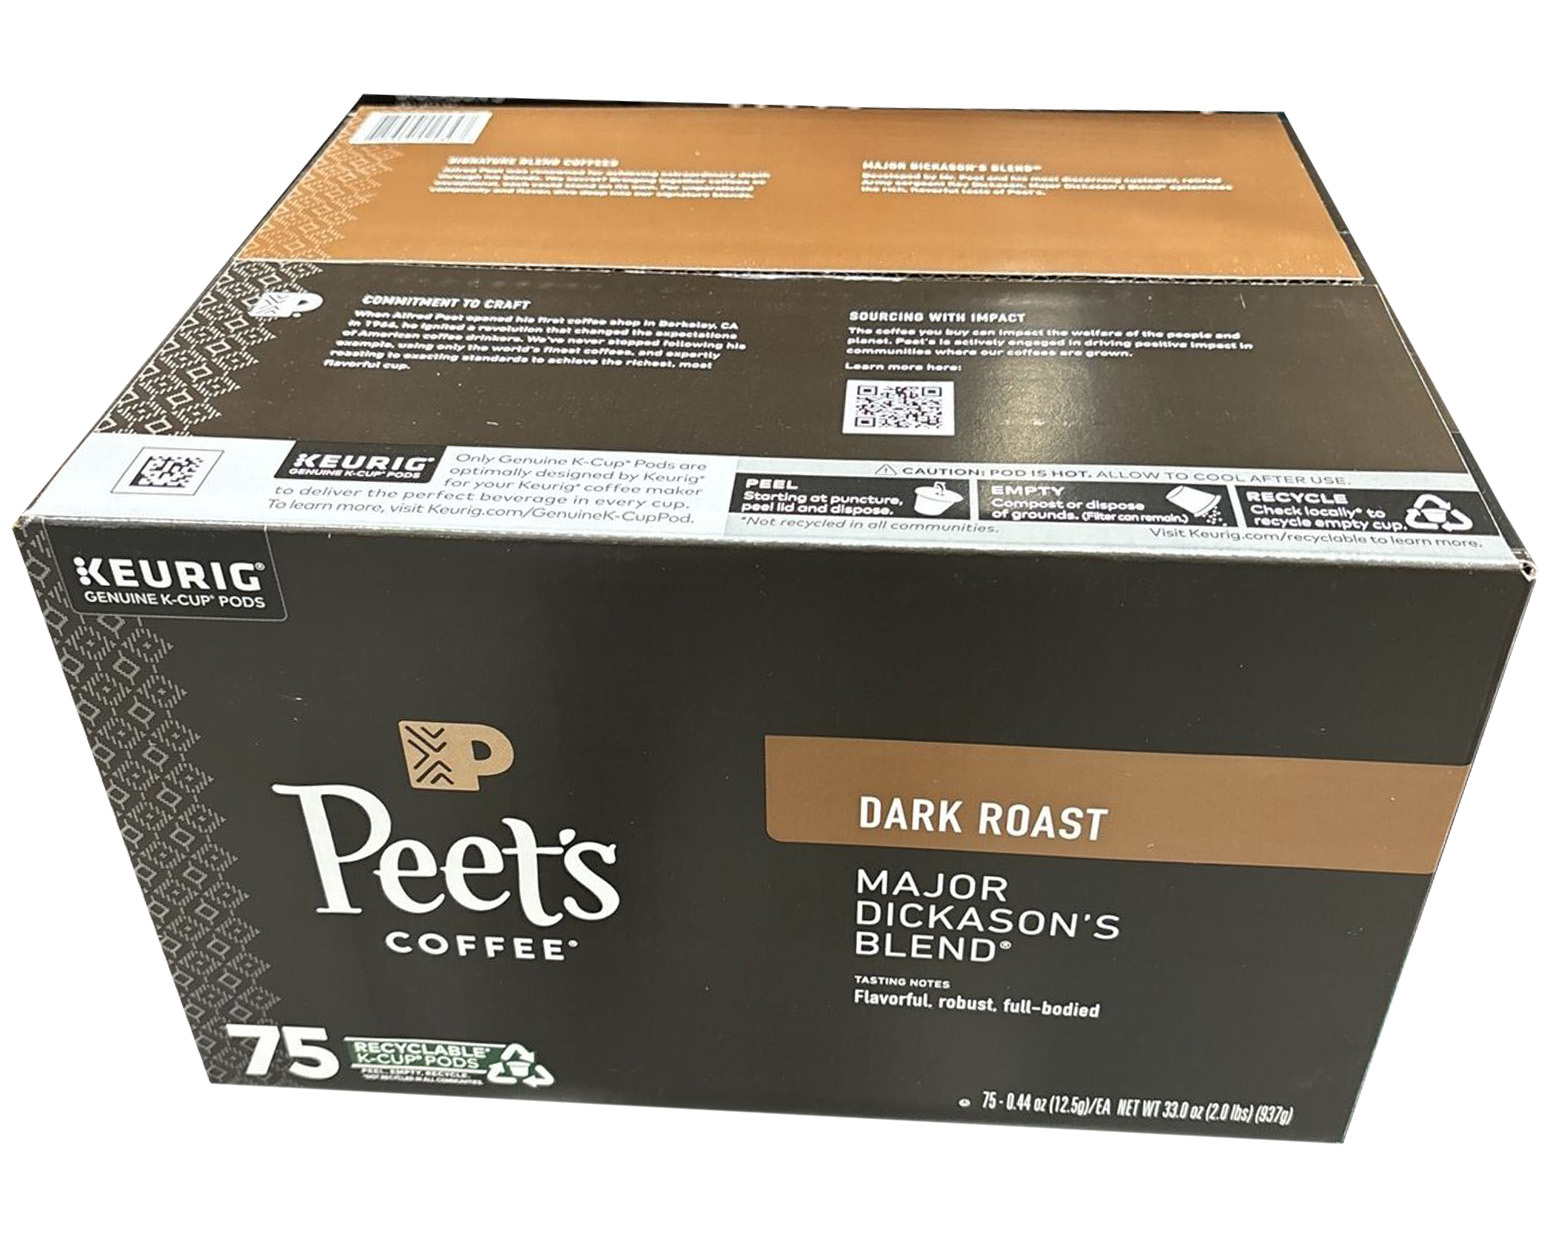 Primary image for Peet's Coffee Dark Roast Coffee Blend Capsules, Major Dickason's - 75 Count